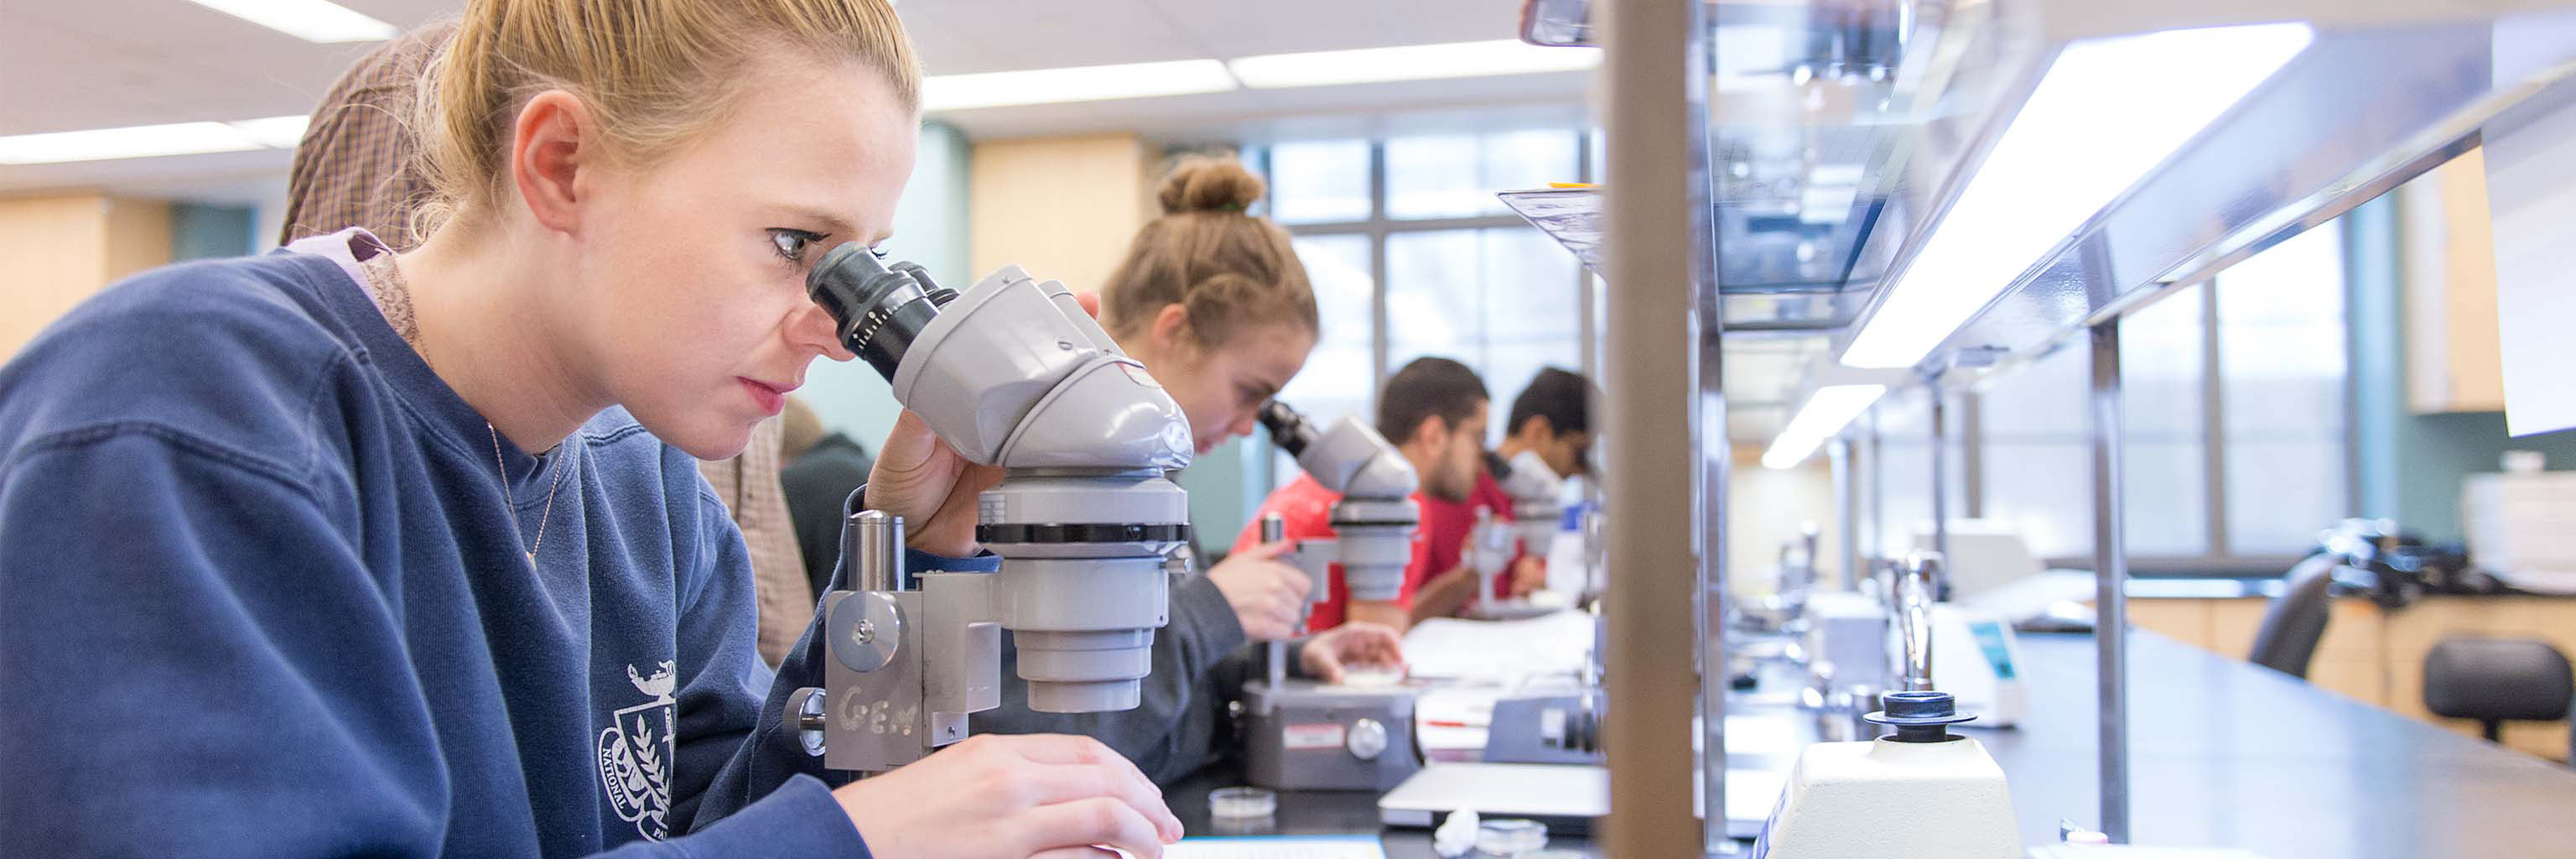 Undergraduate student looking into a microscope